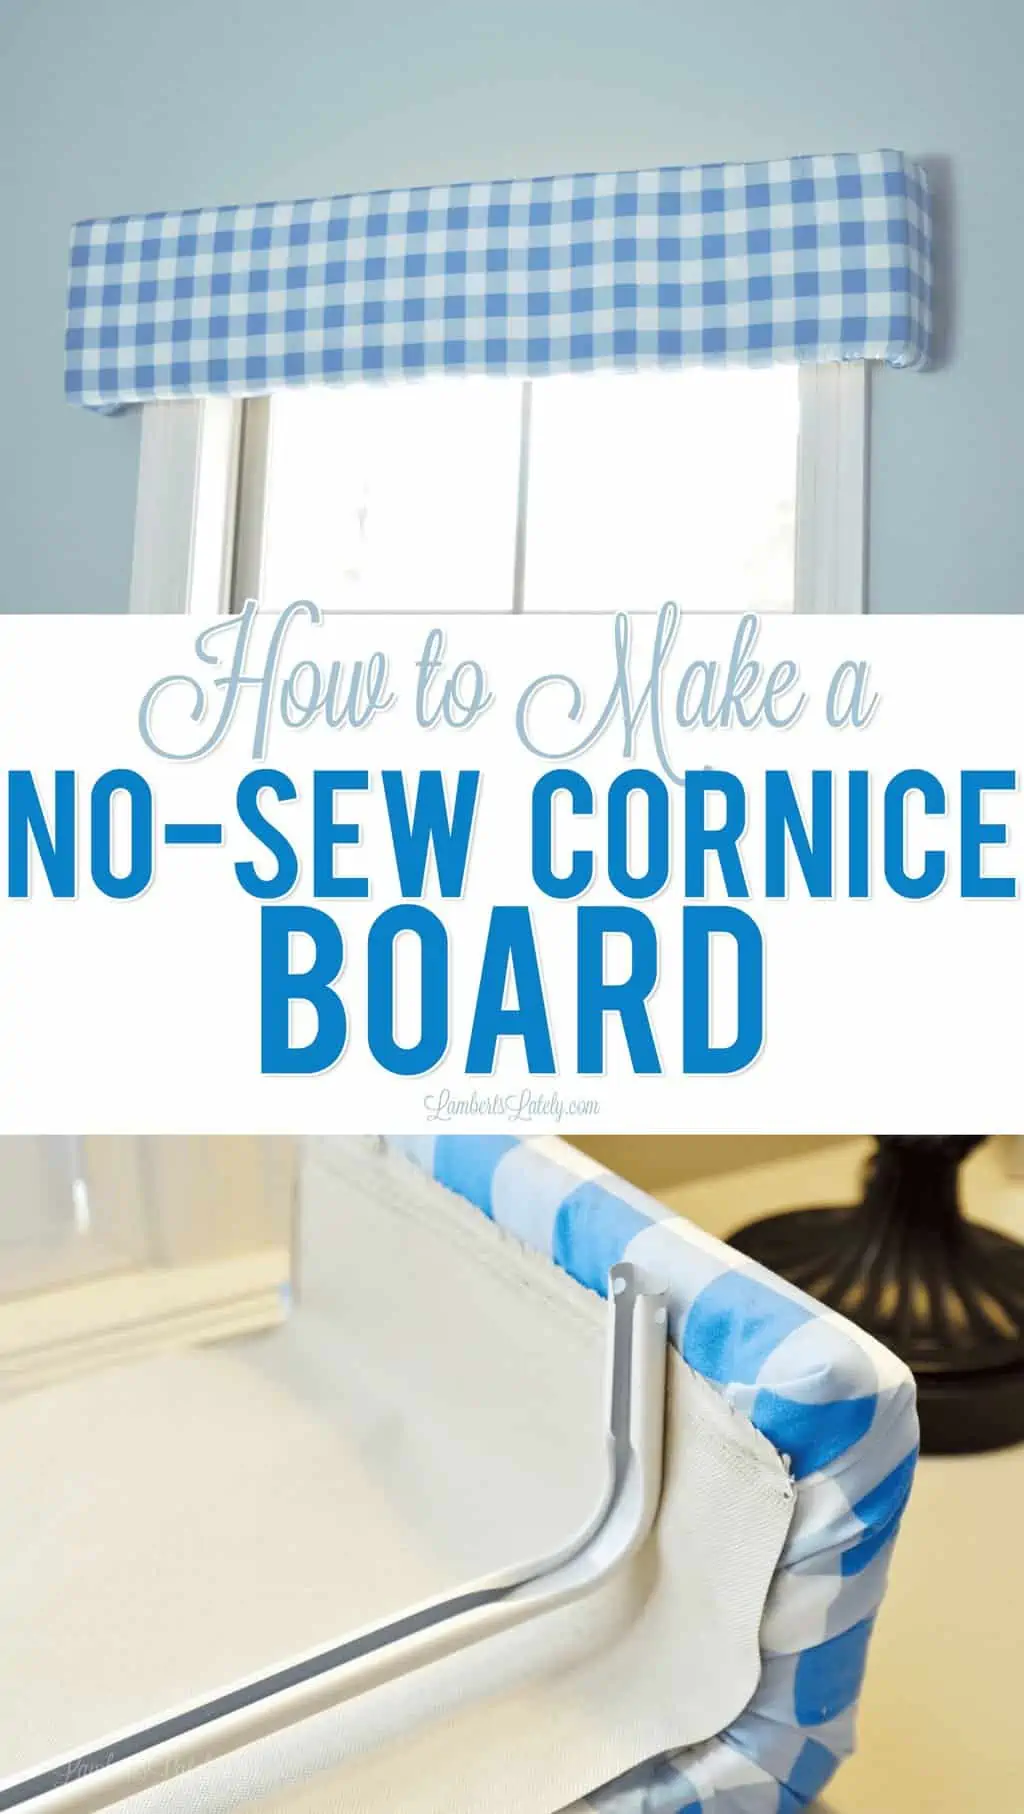 how to make a no-sew cornice board.